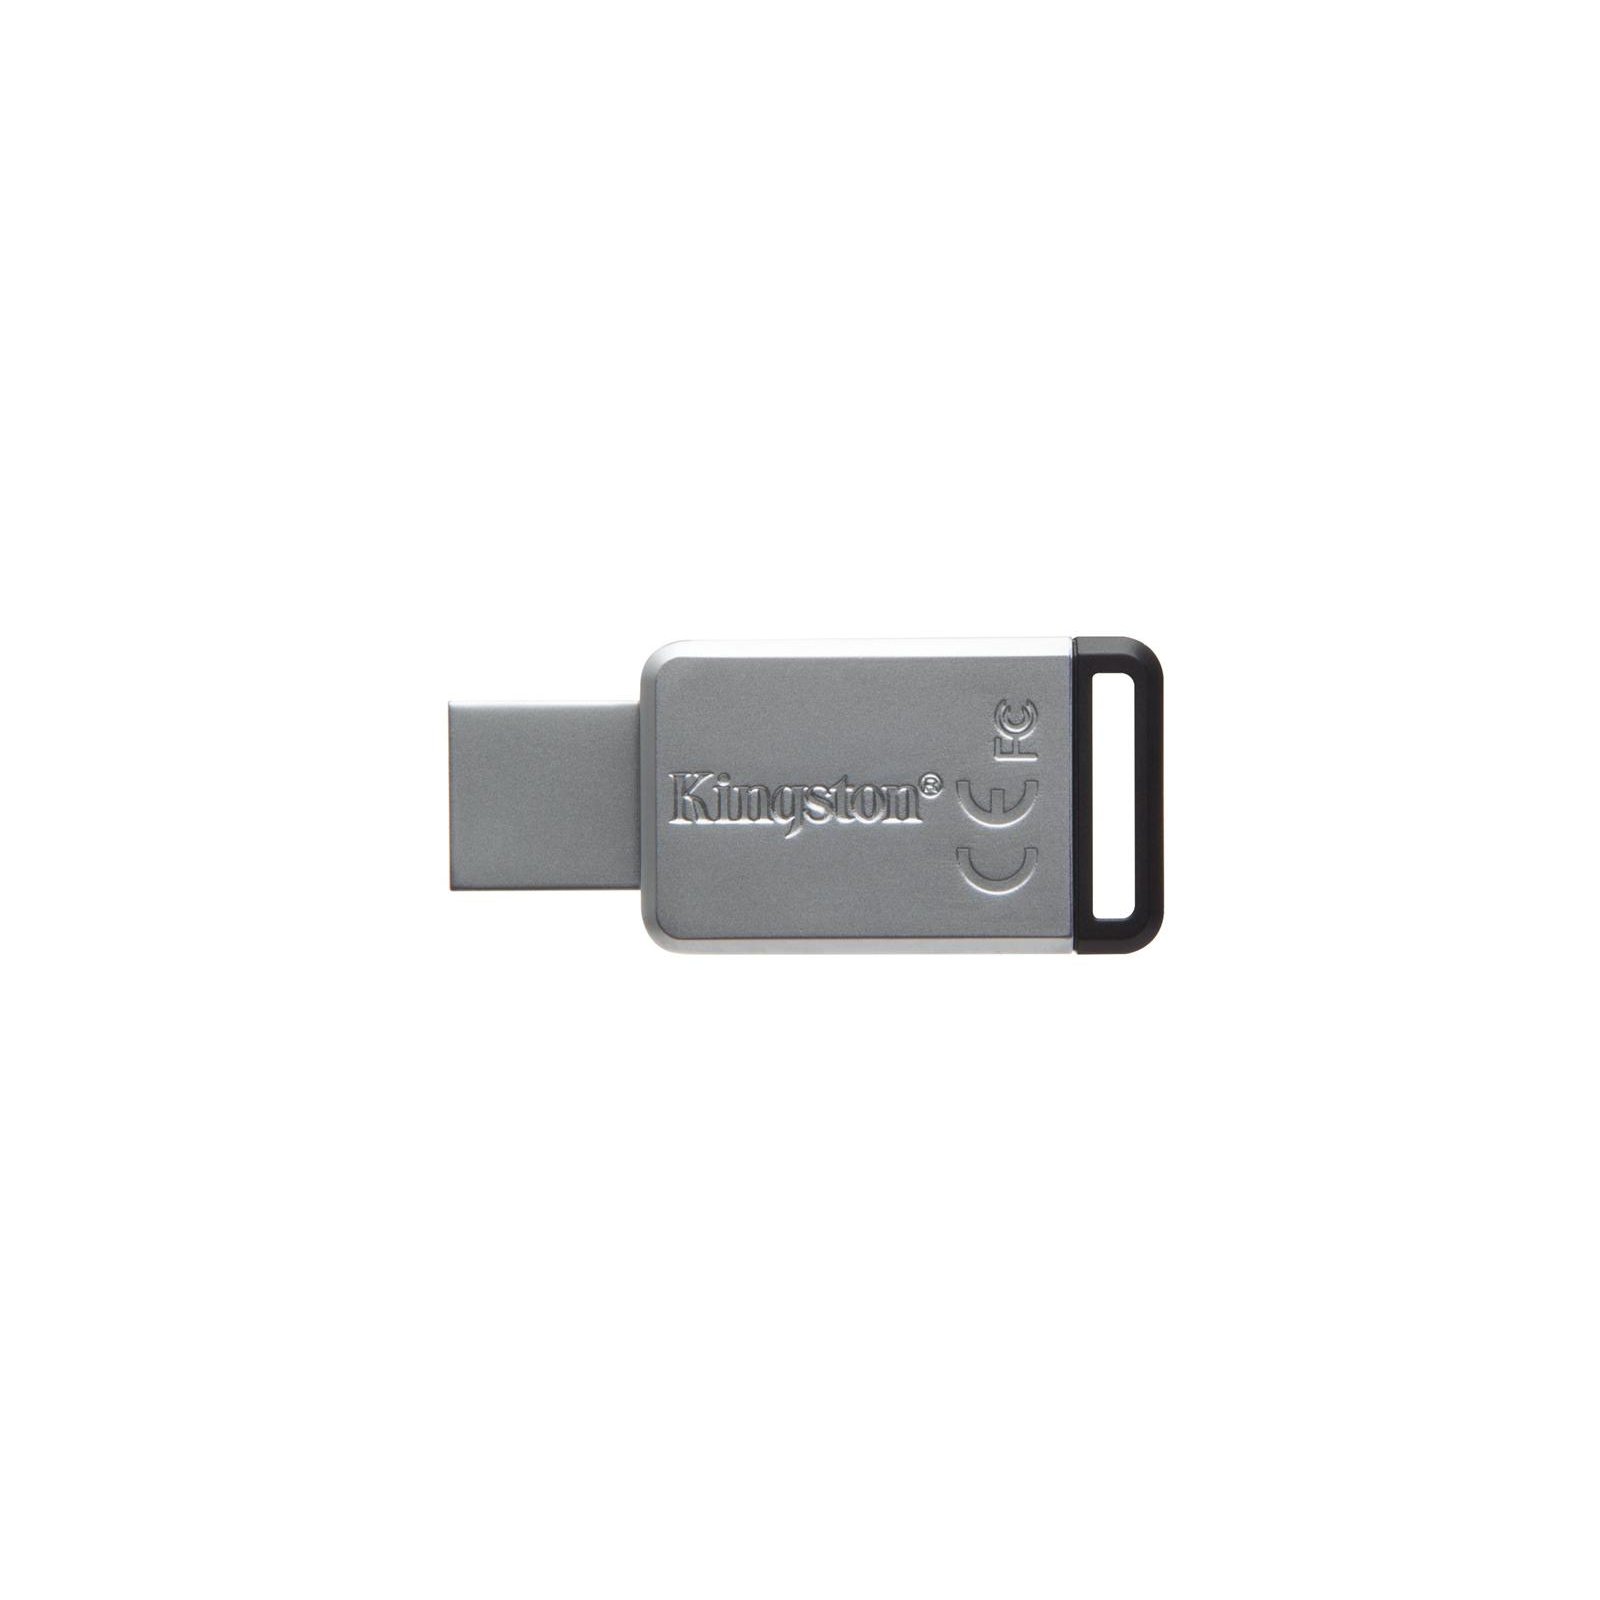 USB флеш накопитель Kingston 128GB DT50 USB 3.1 (DT50/128GB) изображение 2